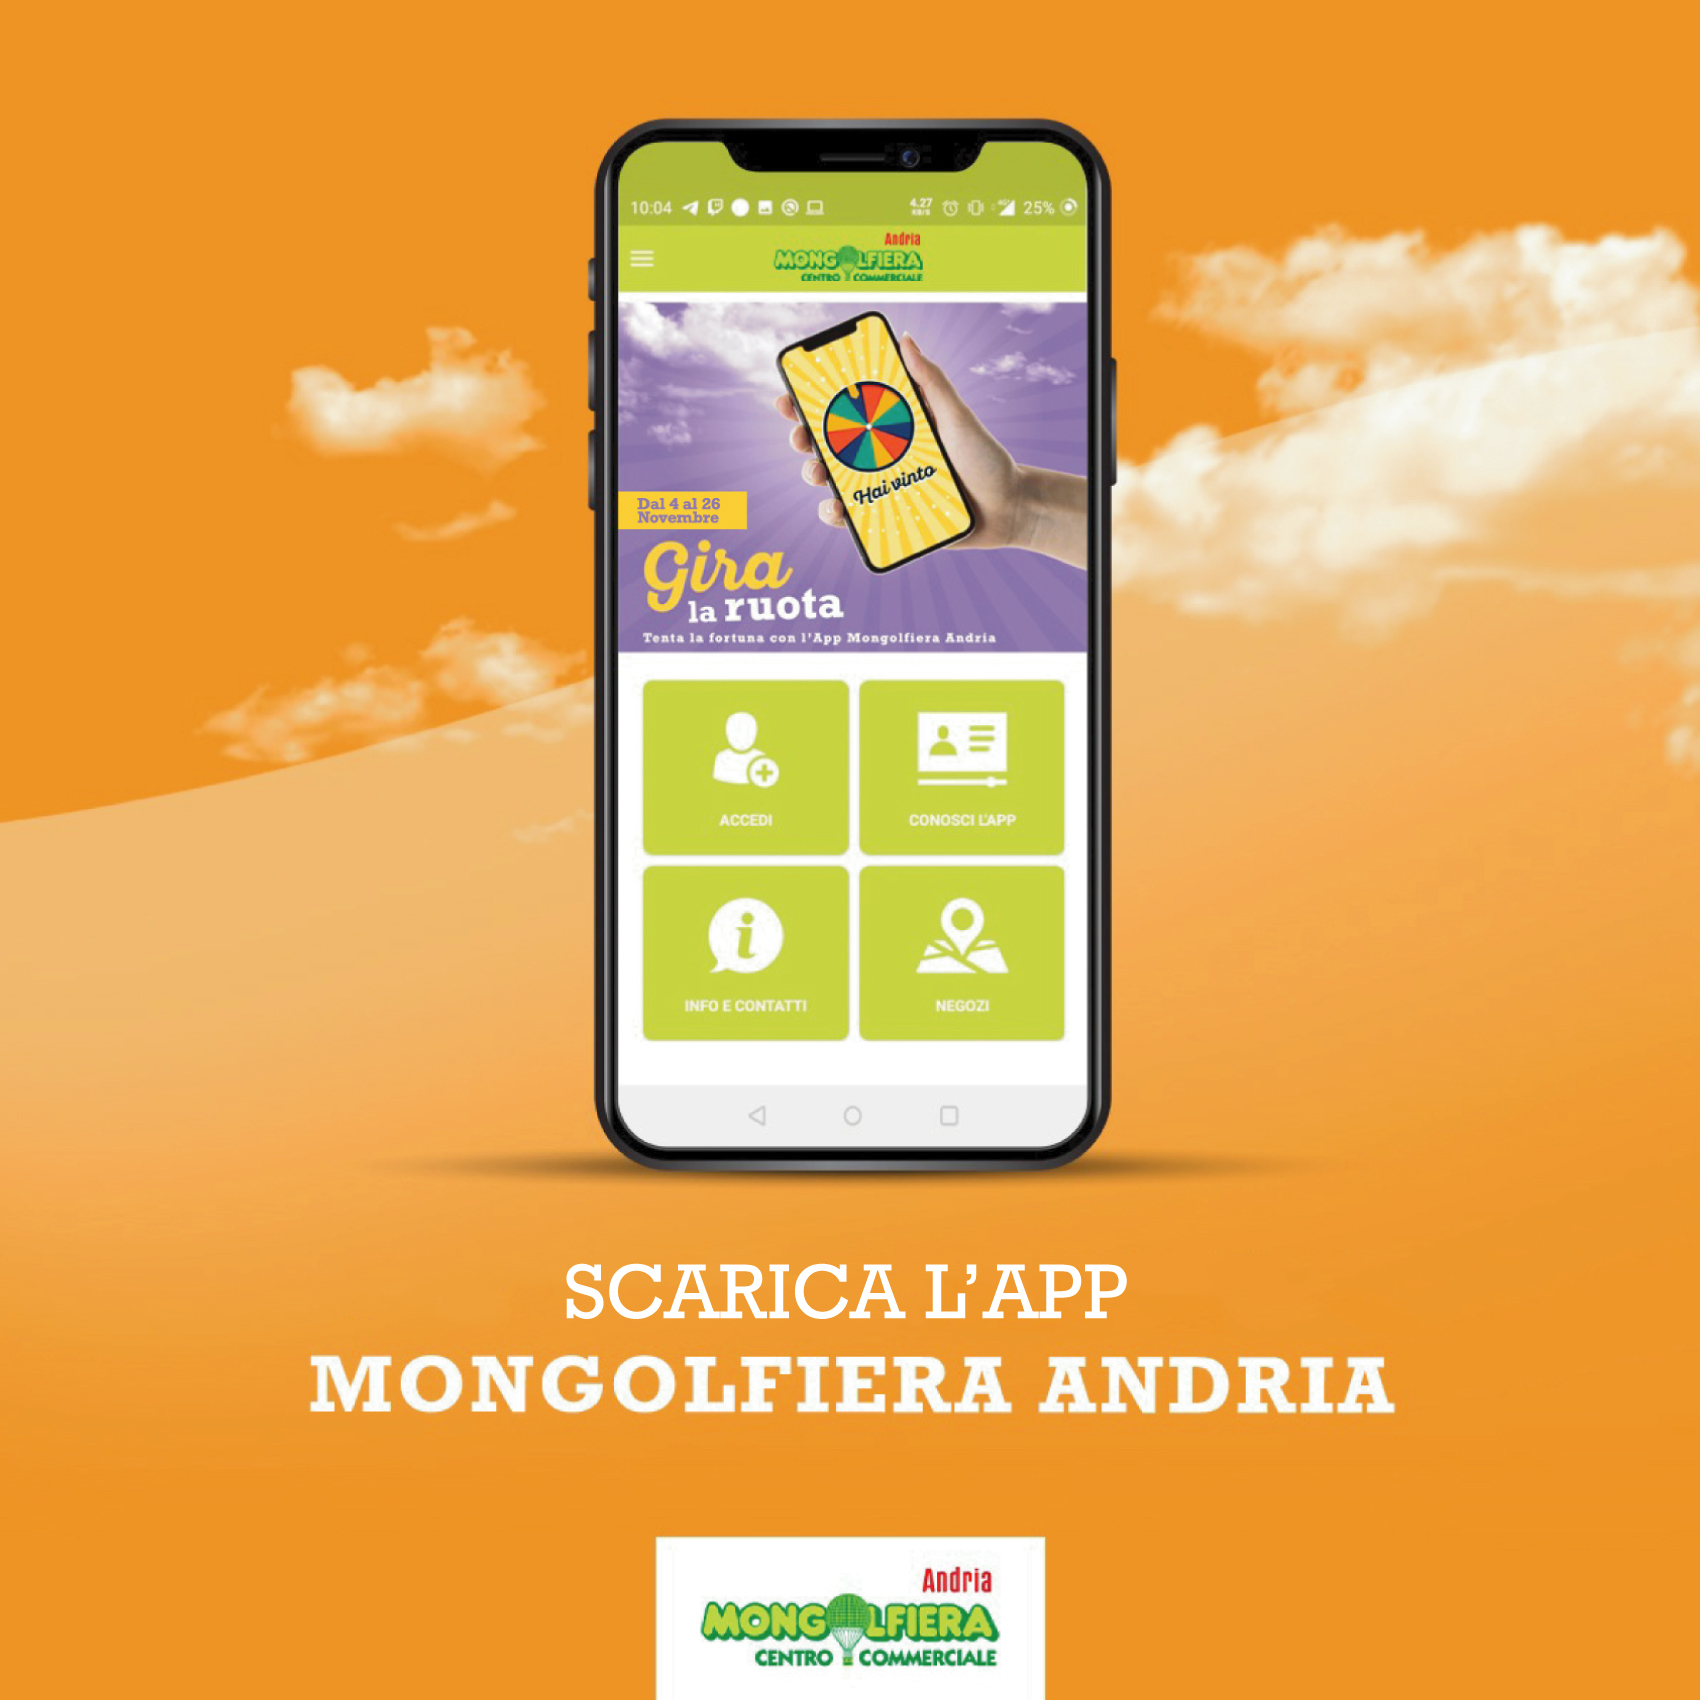 Scarica l'App "Mongolfiera Andria"